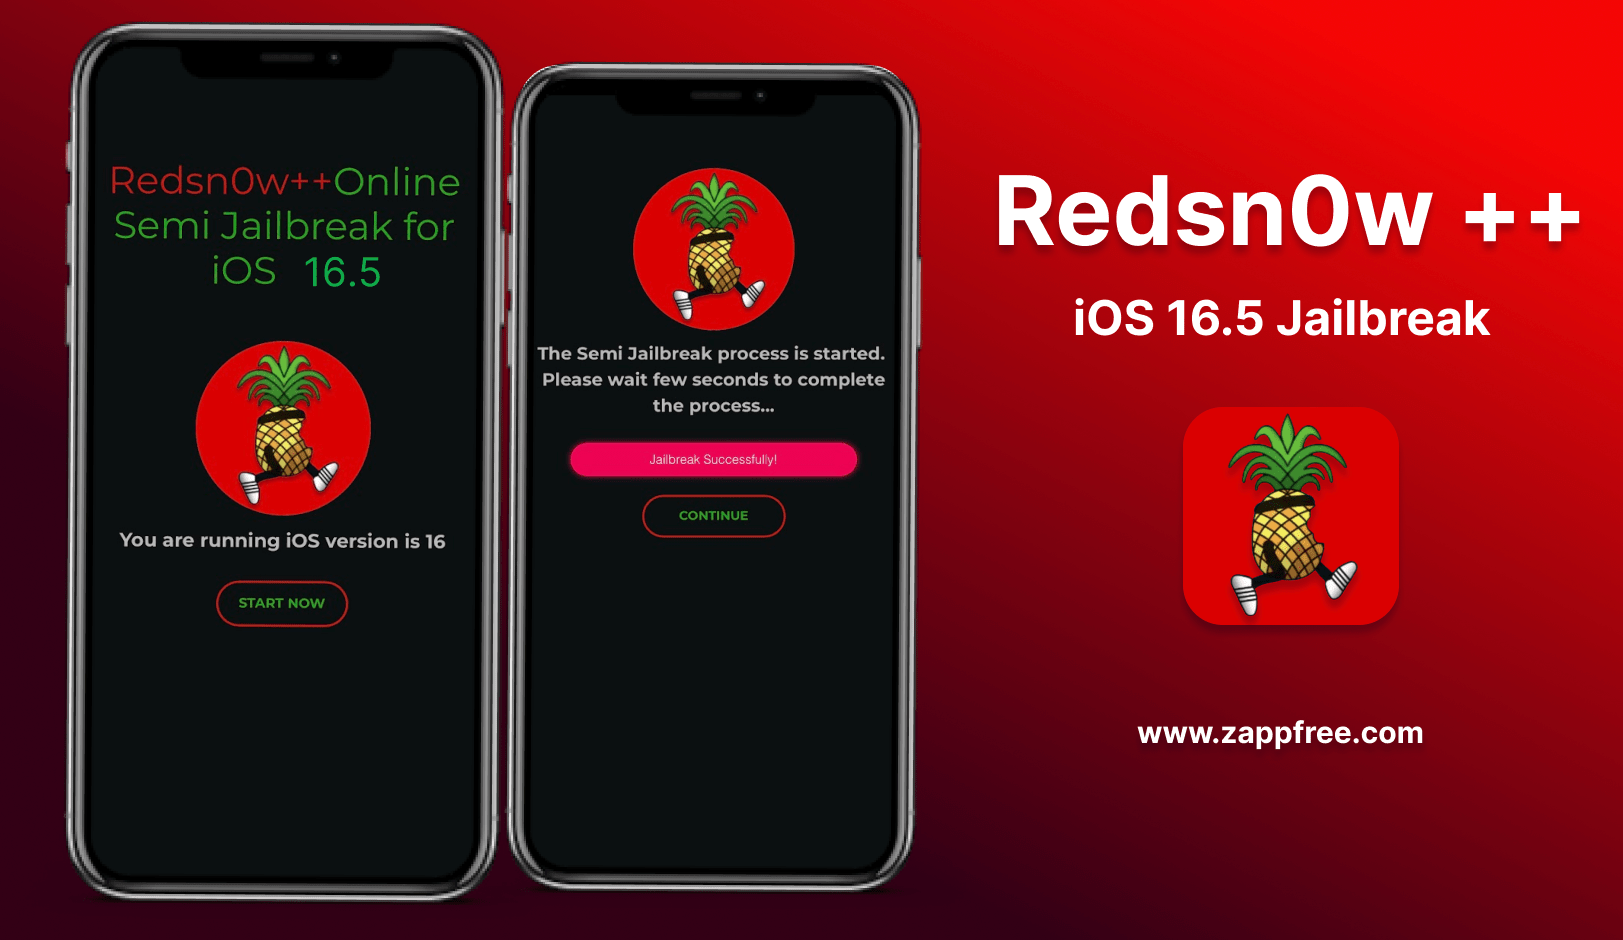 Redsn0w++ Jailbreak Apps